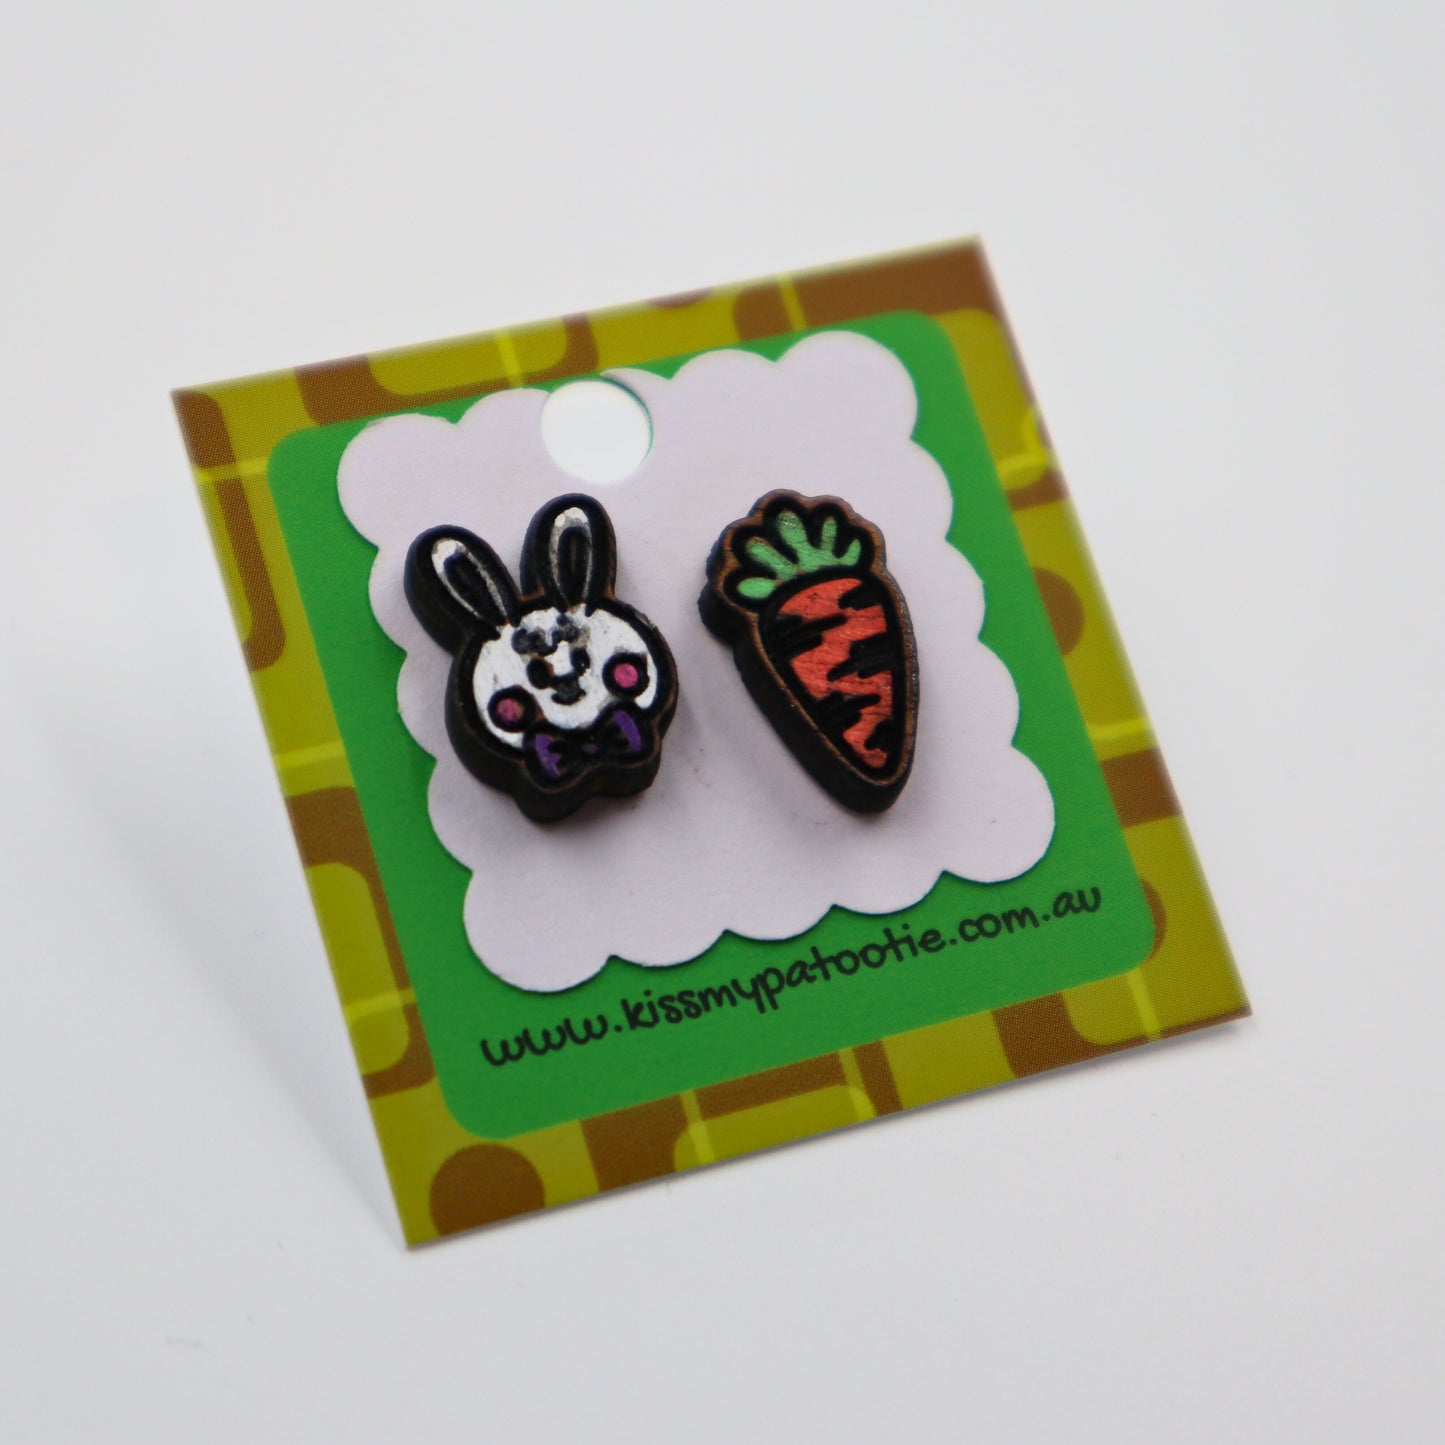 Bunny rabbit wooden earrings - hand painted